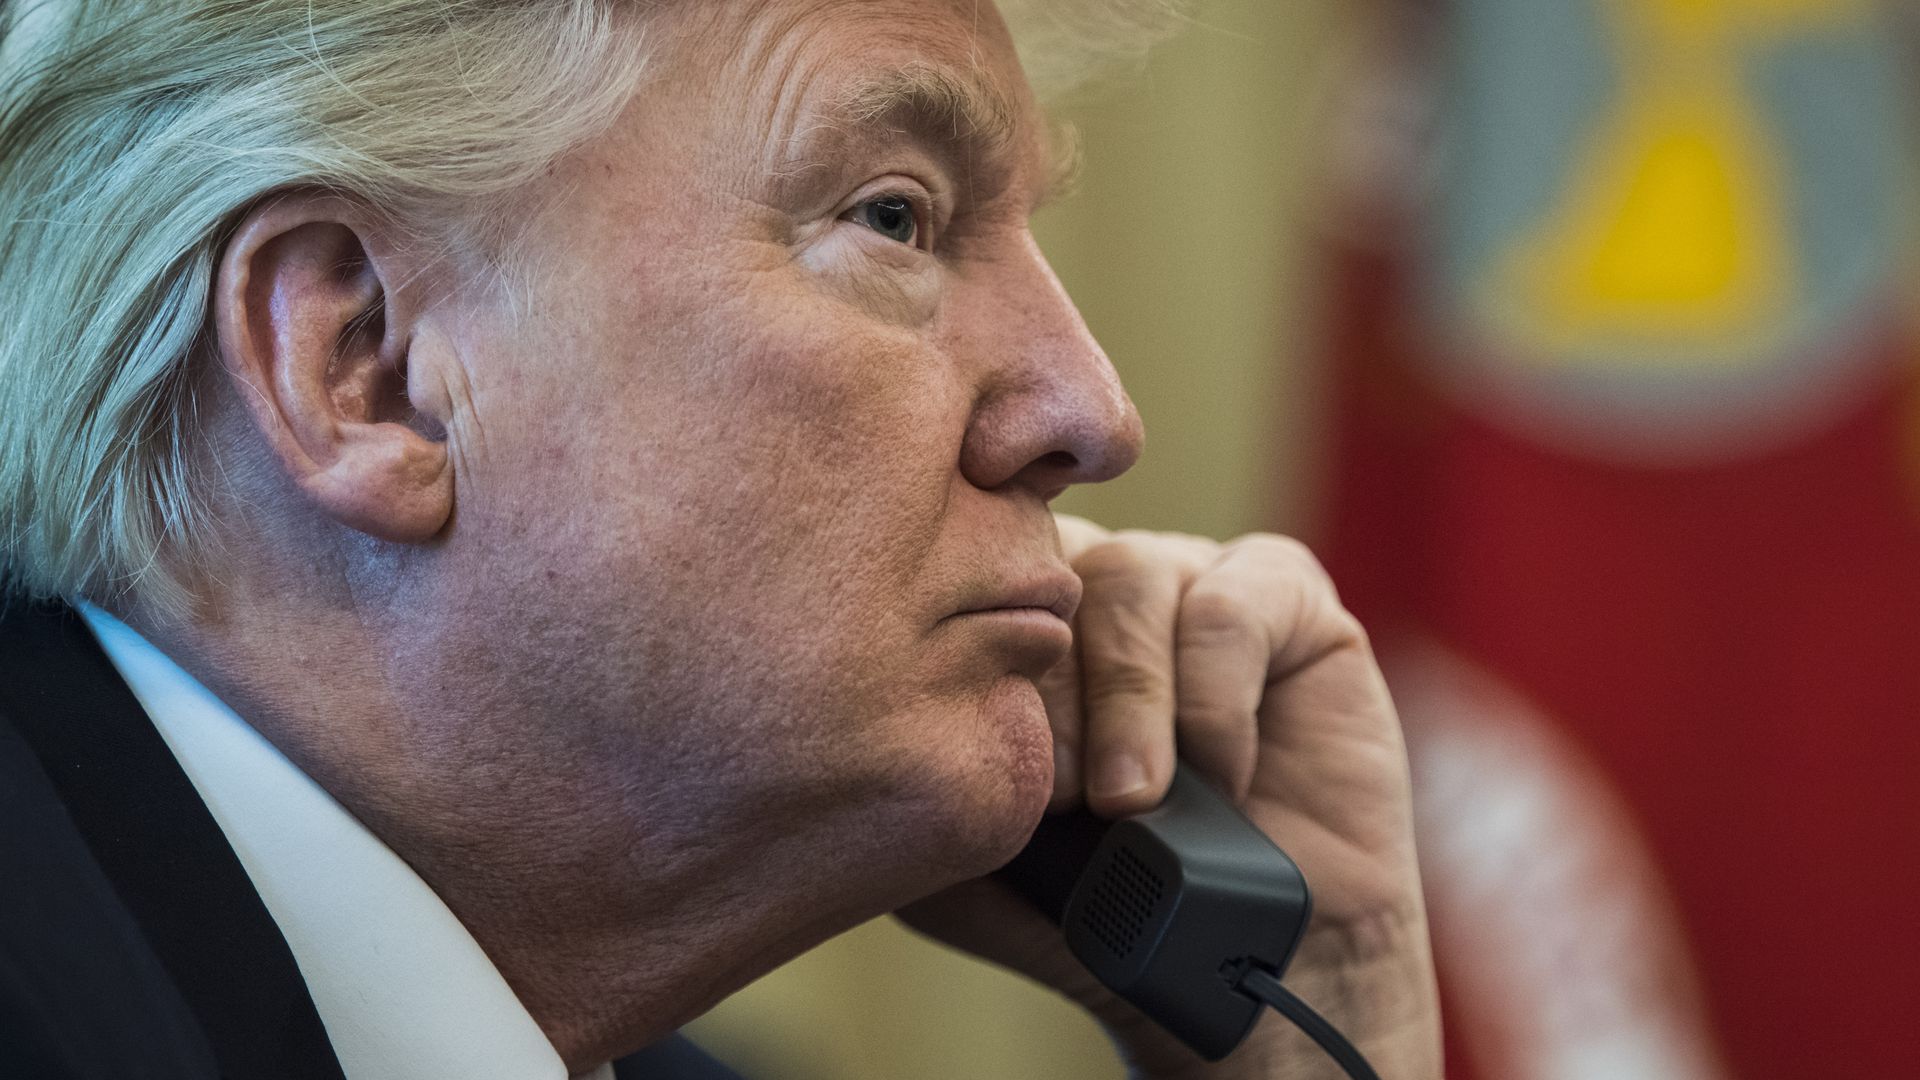 Donald Trump on a landline phone